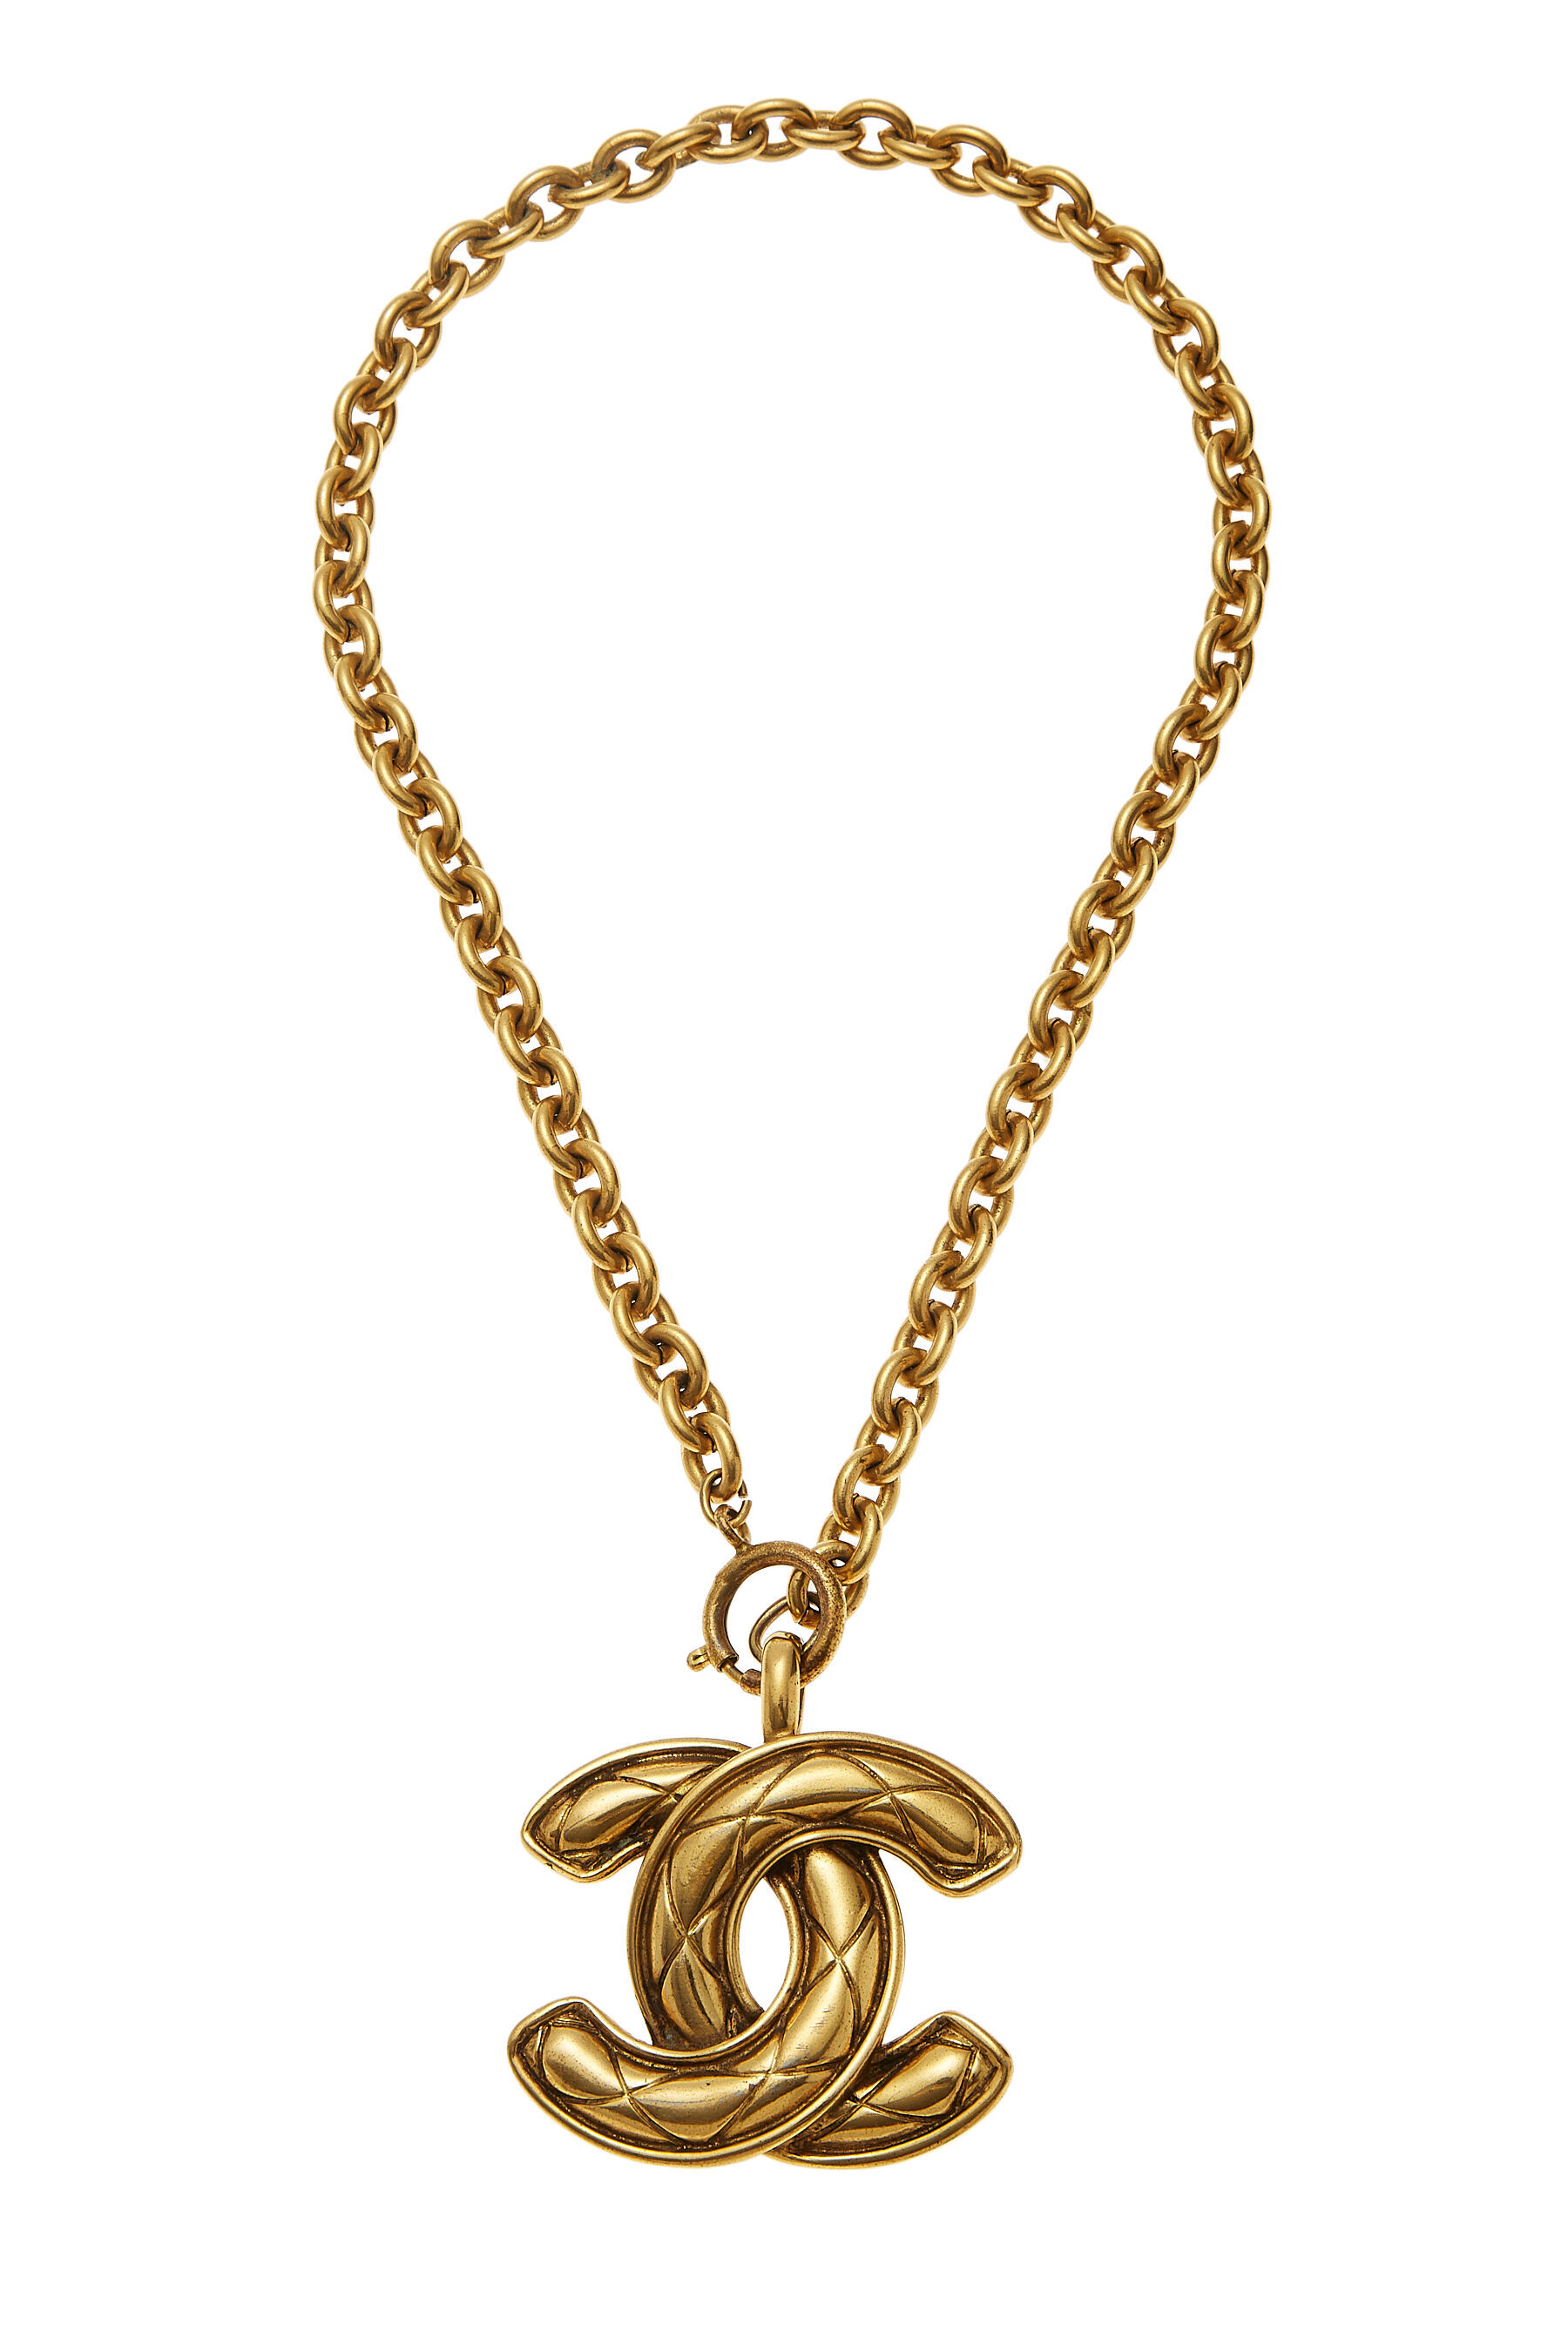 Chanel 20B Gold Pearl Black Crystal CC Logo Statement Pendant Chain Necklace  | eBay